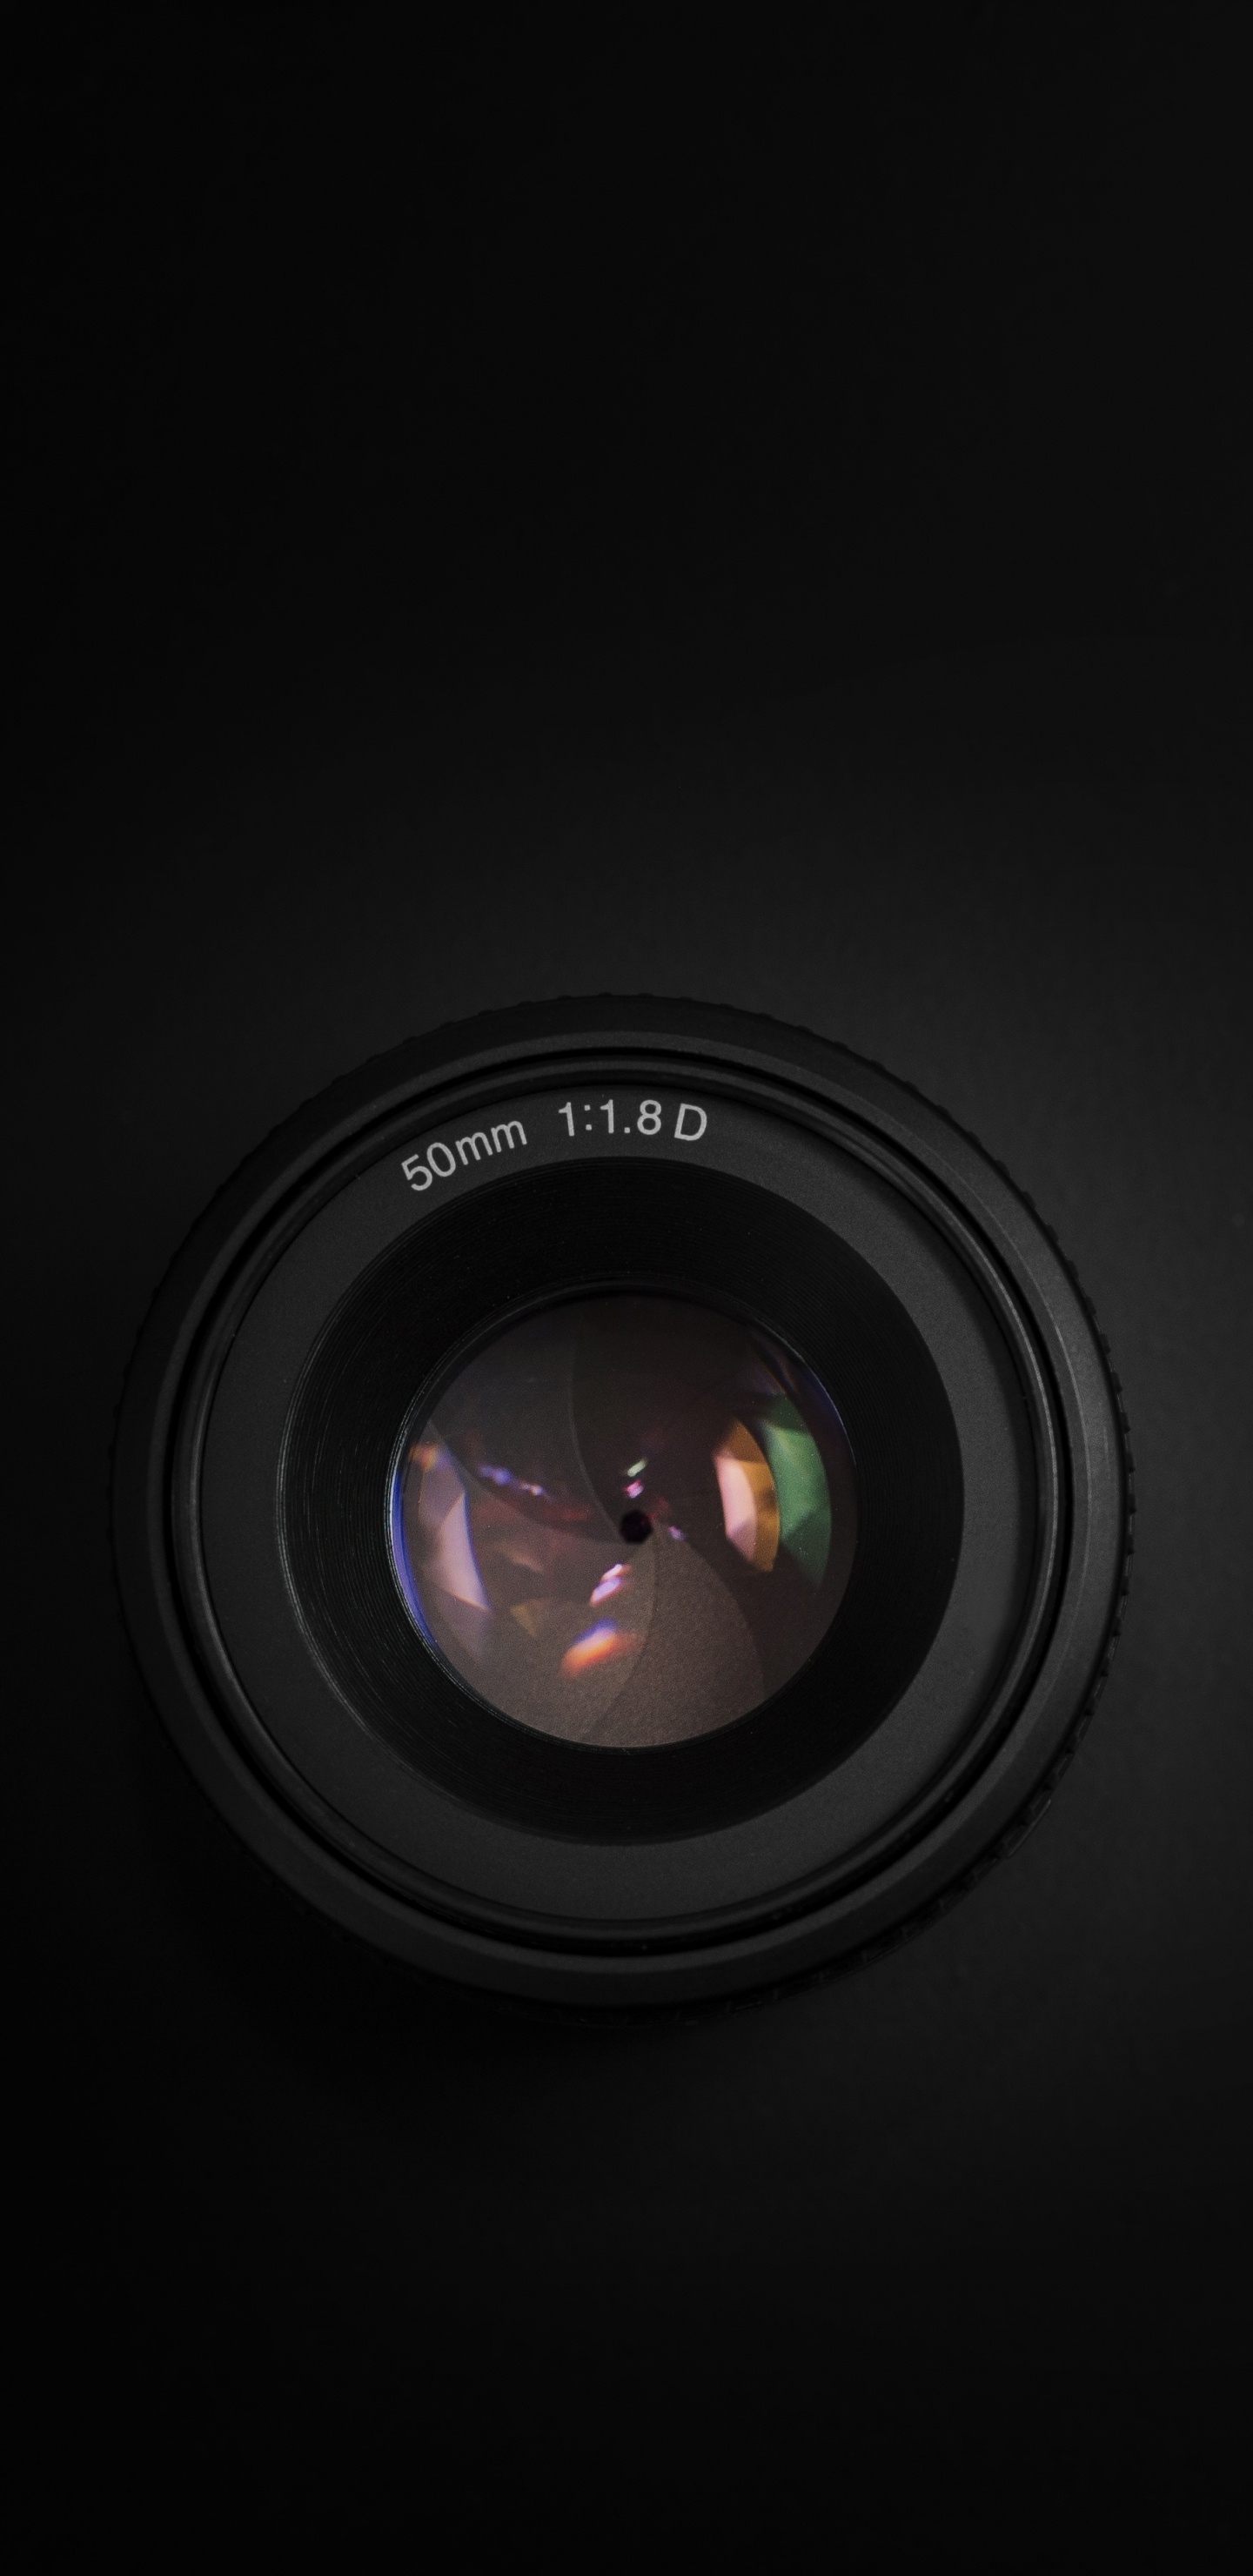 Black Camera Lens on Black Surface. Wallpaper in 1440x2960 Resolution